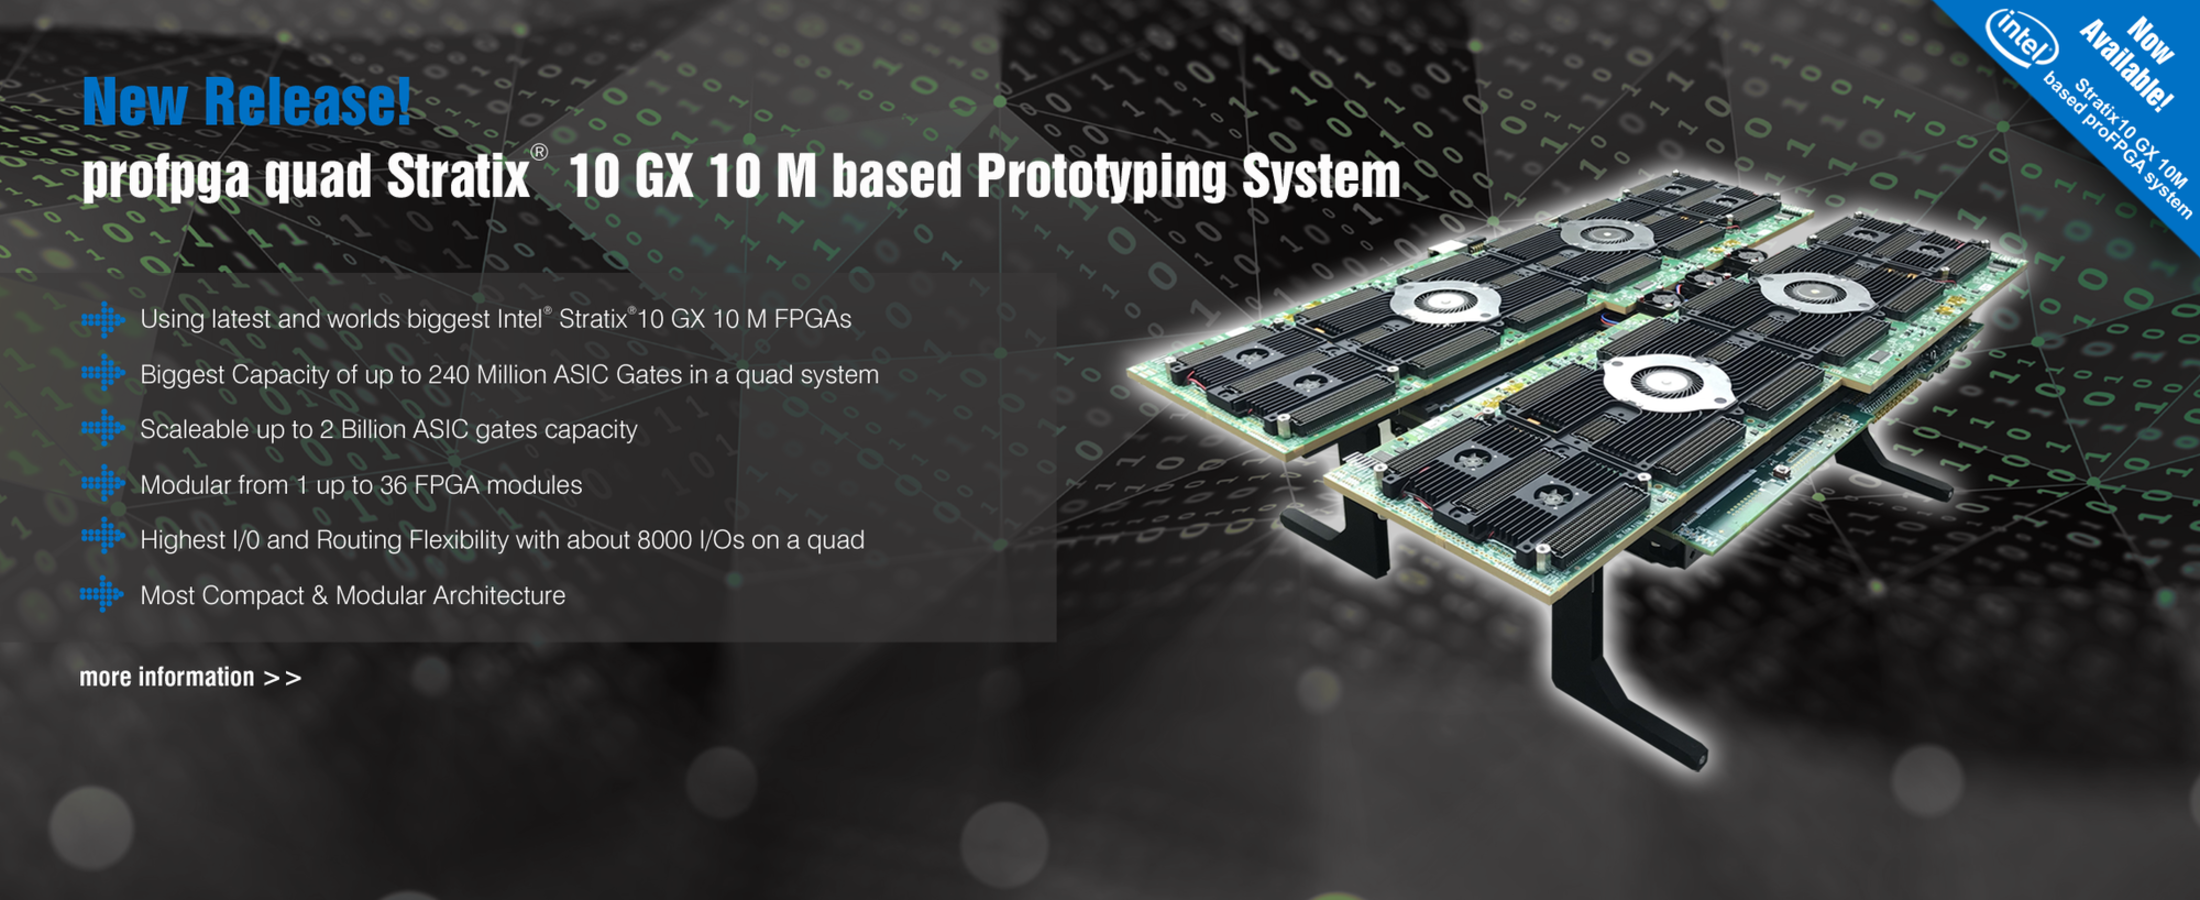 Multi-FPGA System, XCVU15P, Virtex UltraScale+ 15P, Multi-FPGA Prototyping, XCVU19P